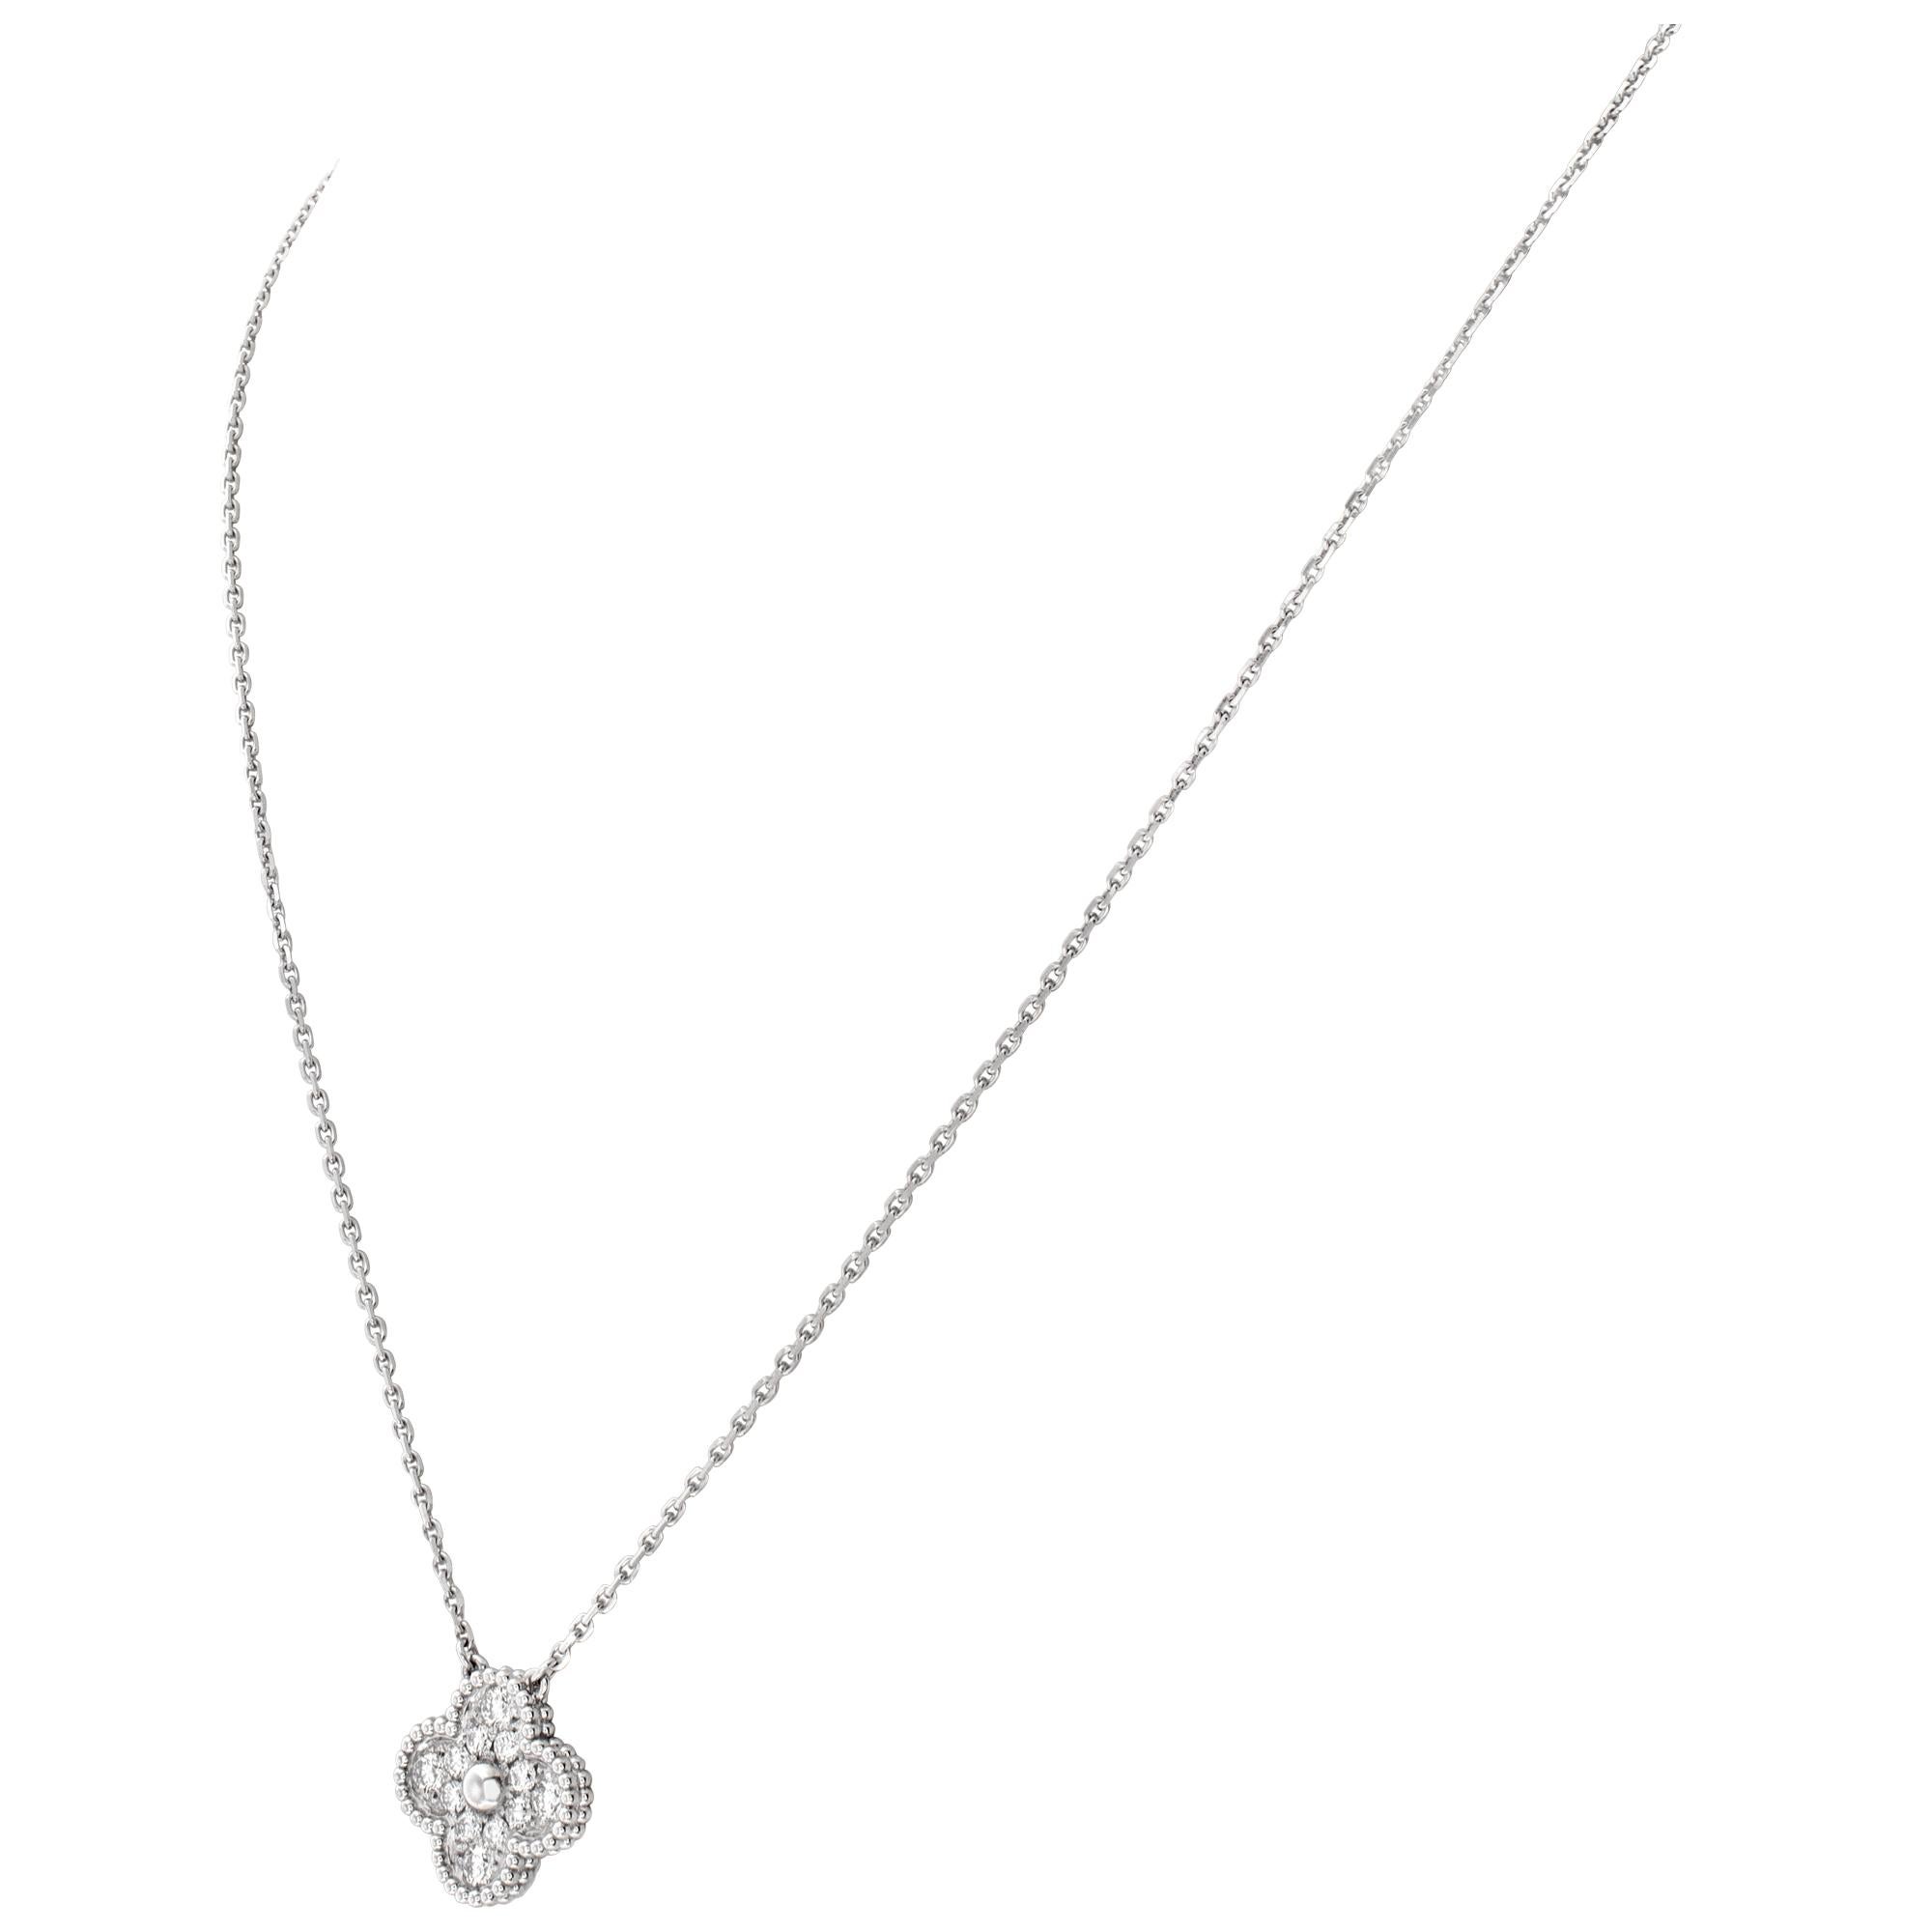 Women's Pendant Necklace in 18k White Gold with 0.48 Ct in Diamonds, Van Cleef & Arpels